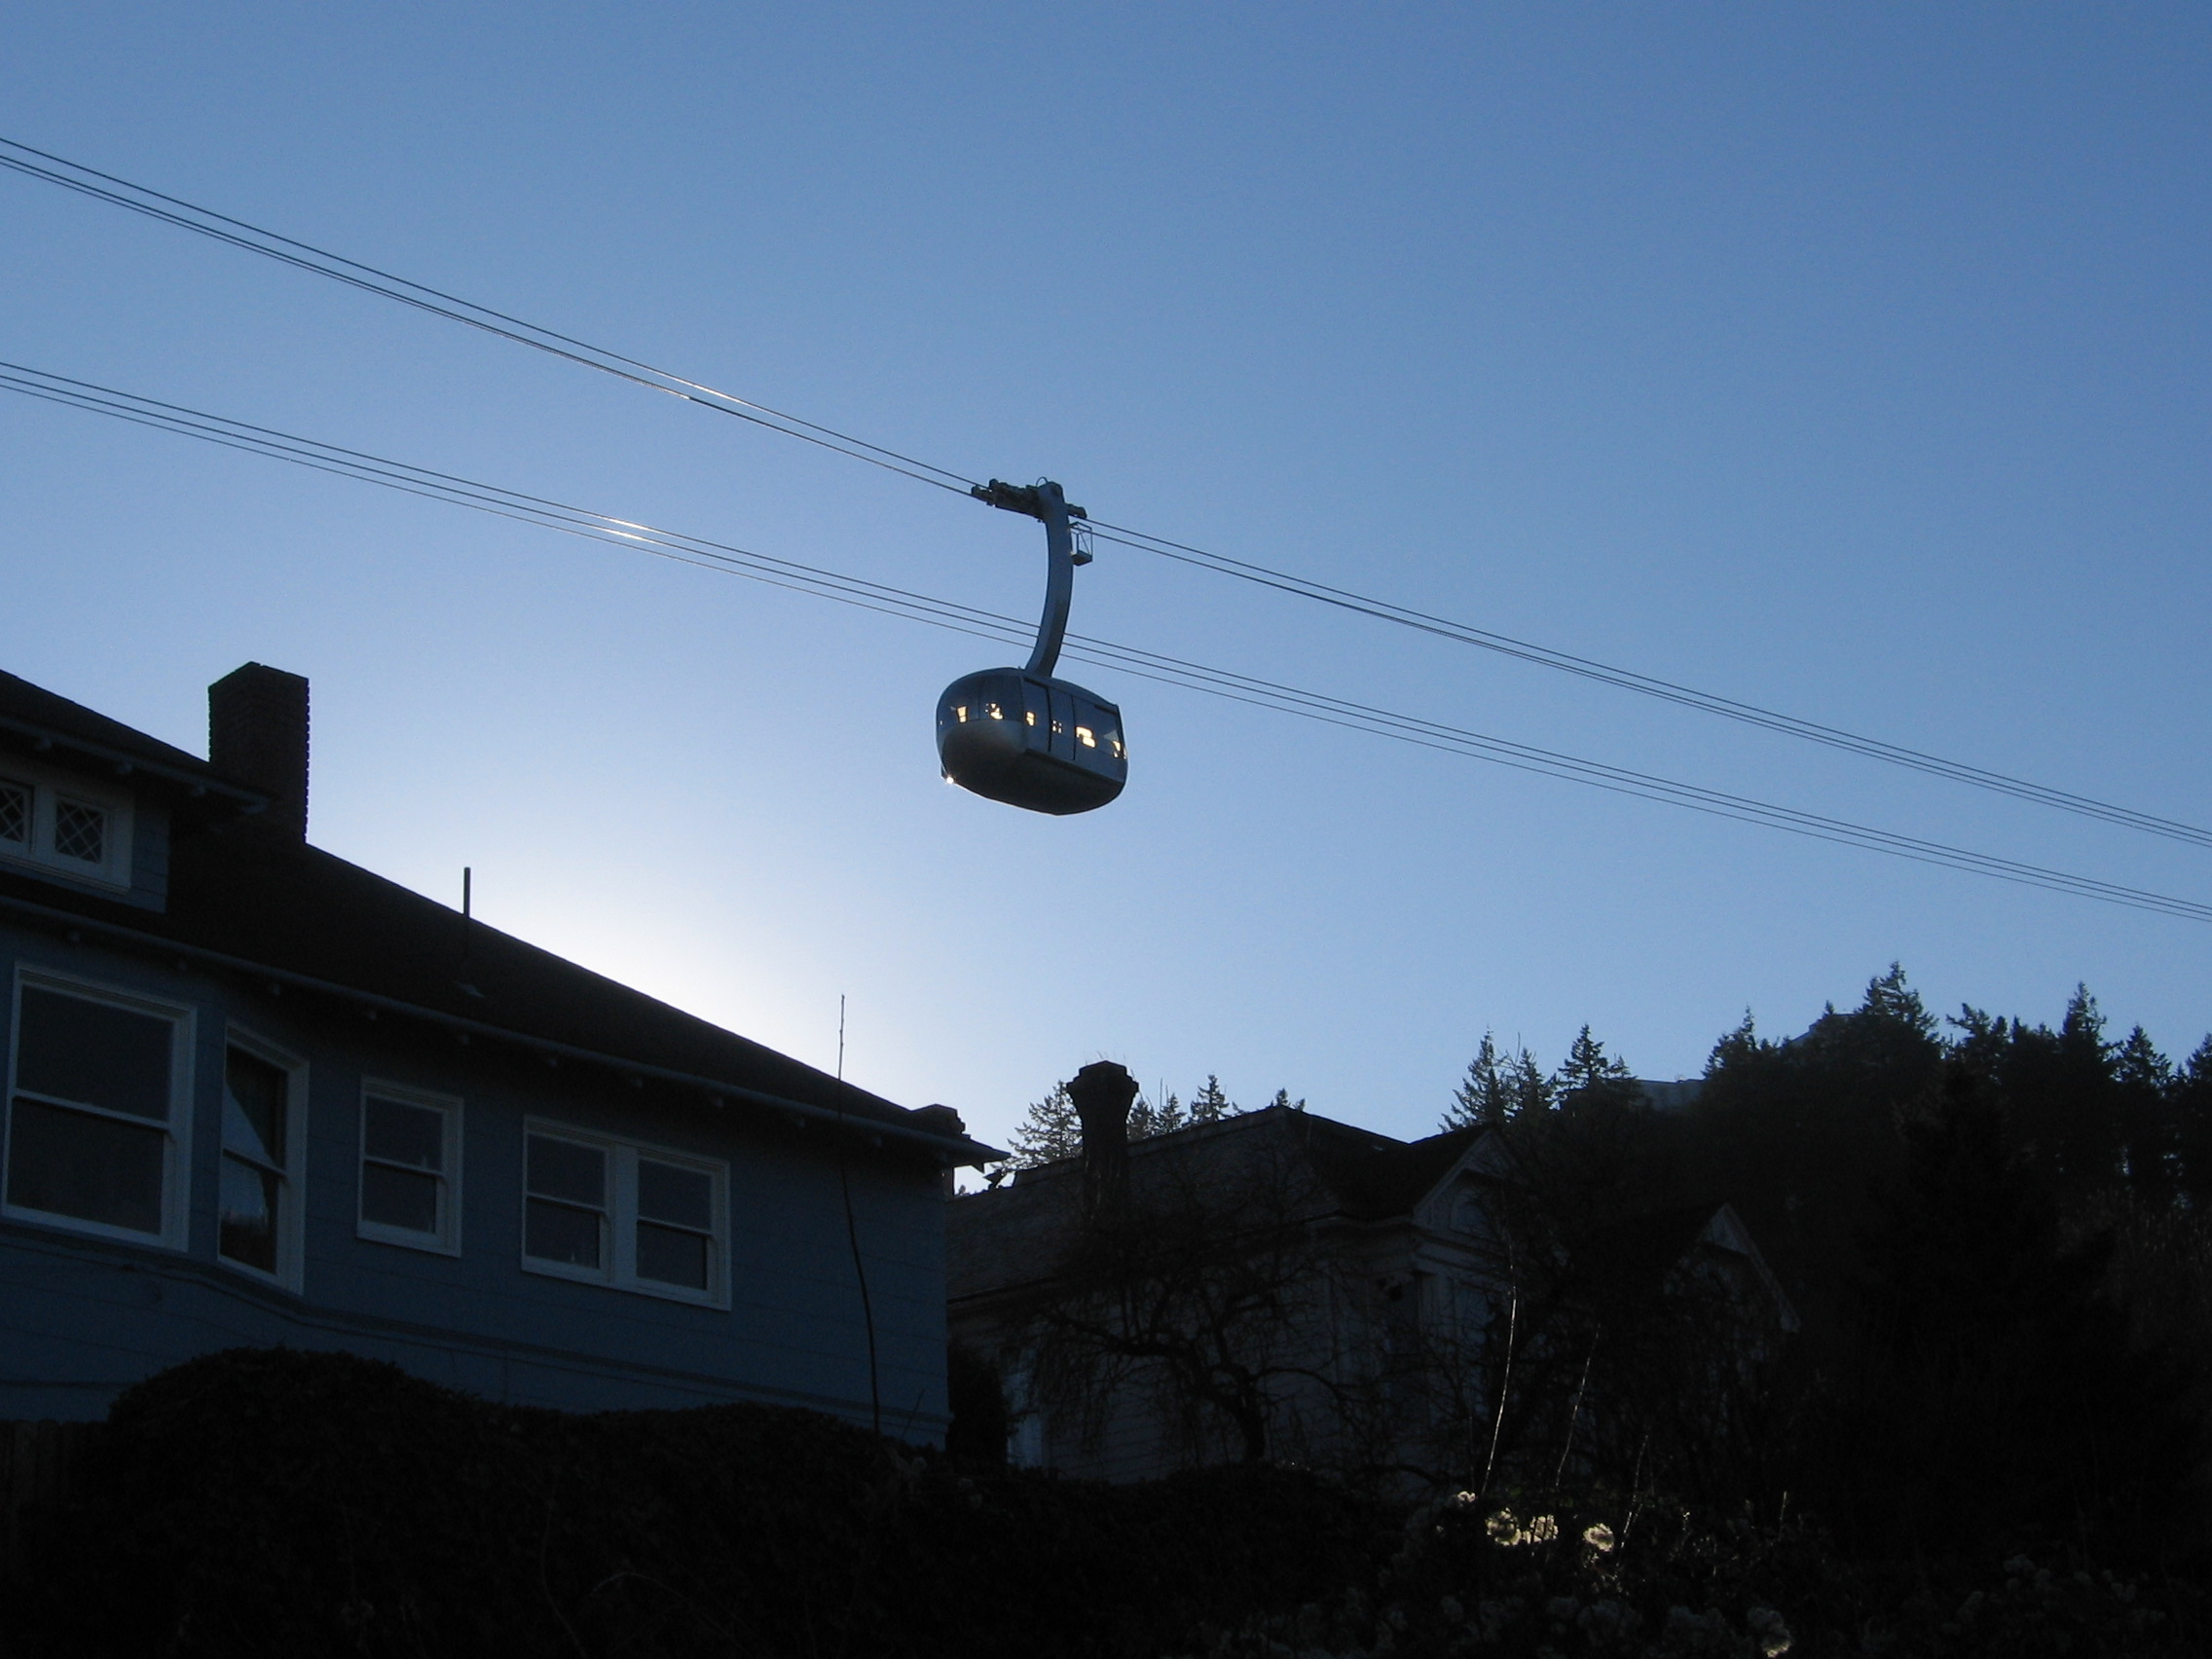 portland aerial tram